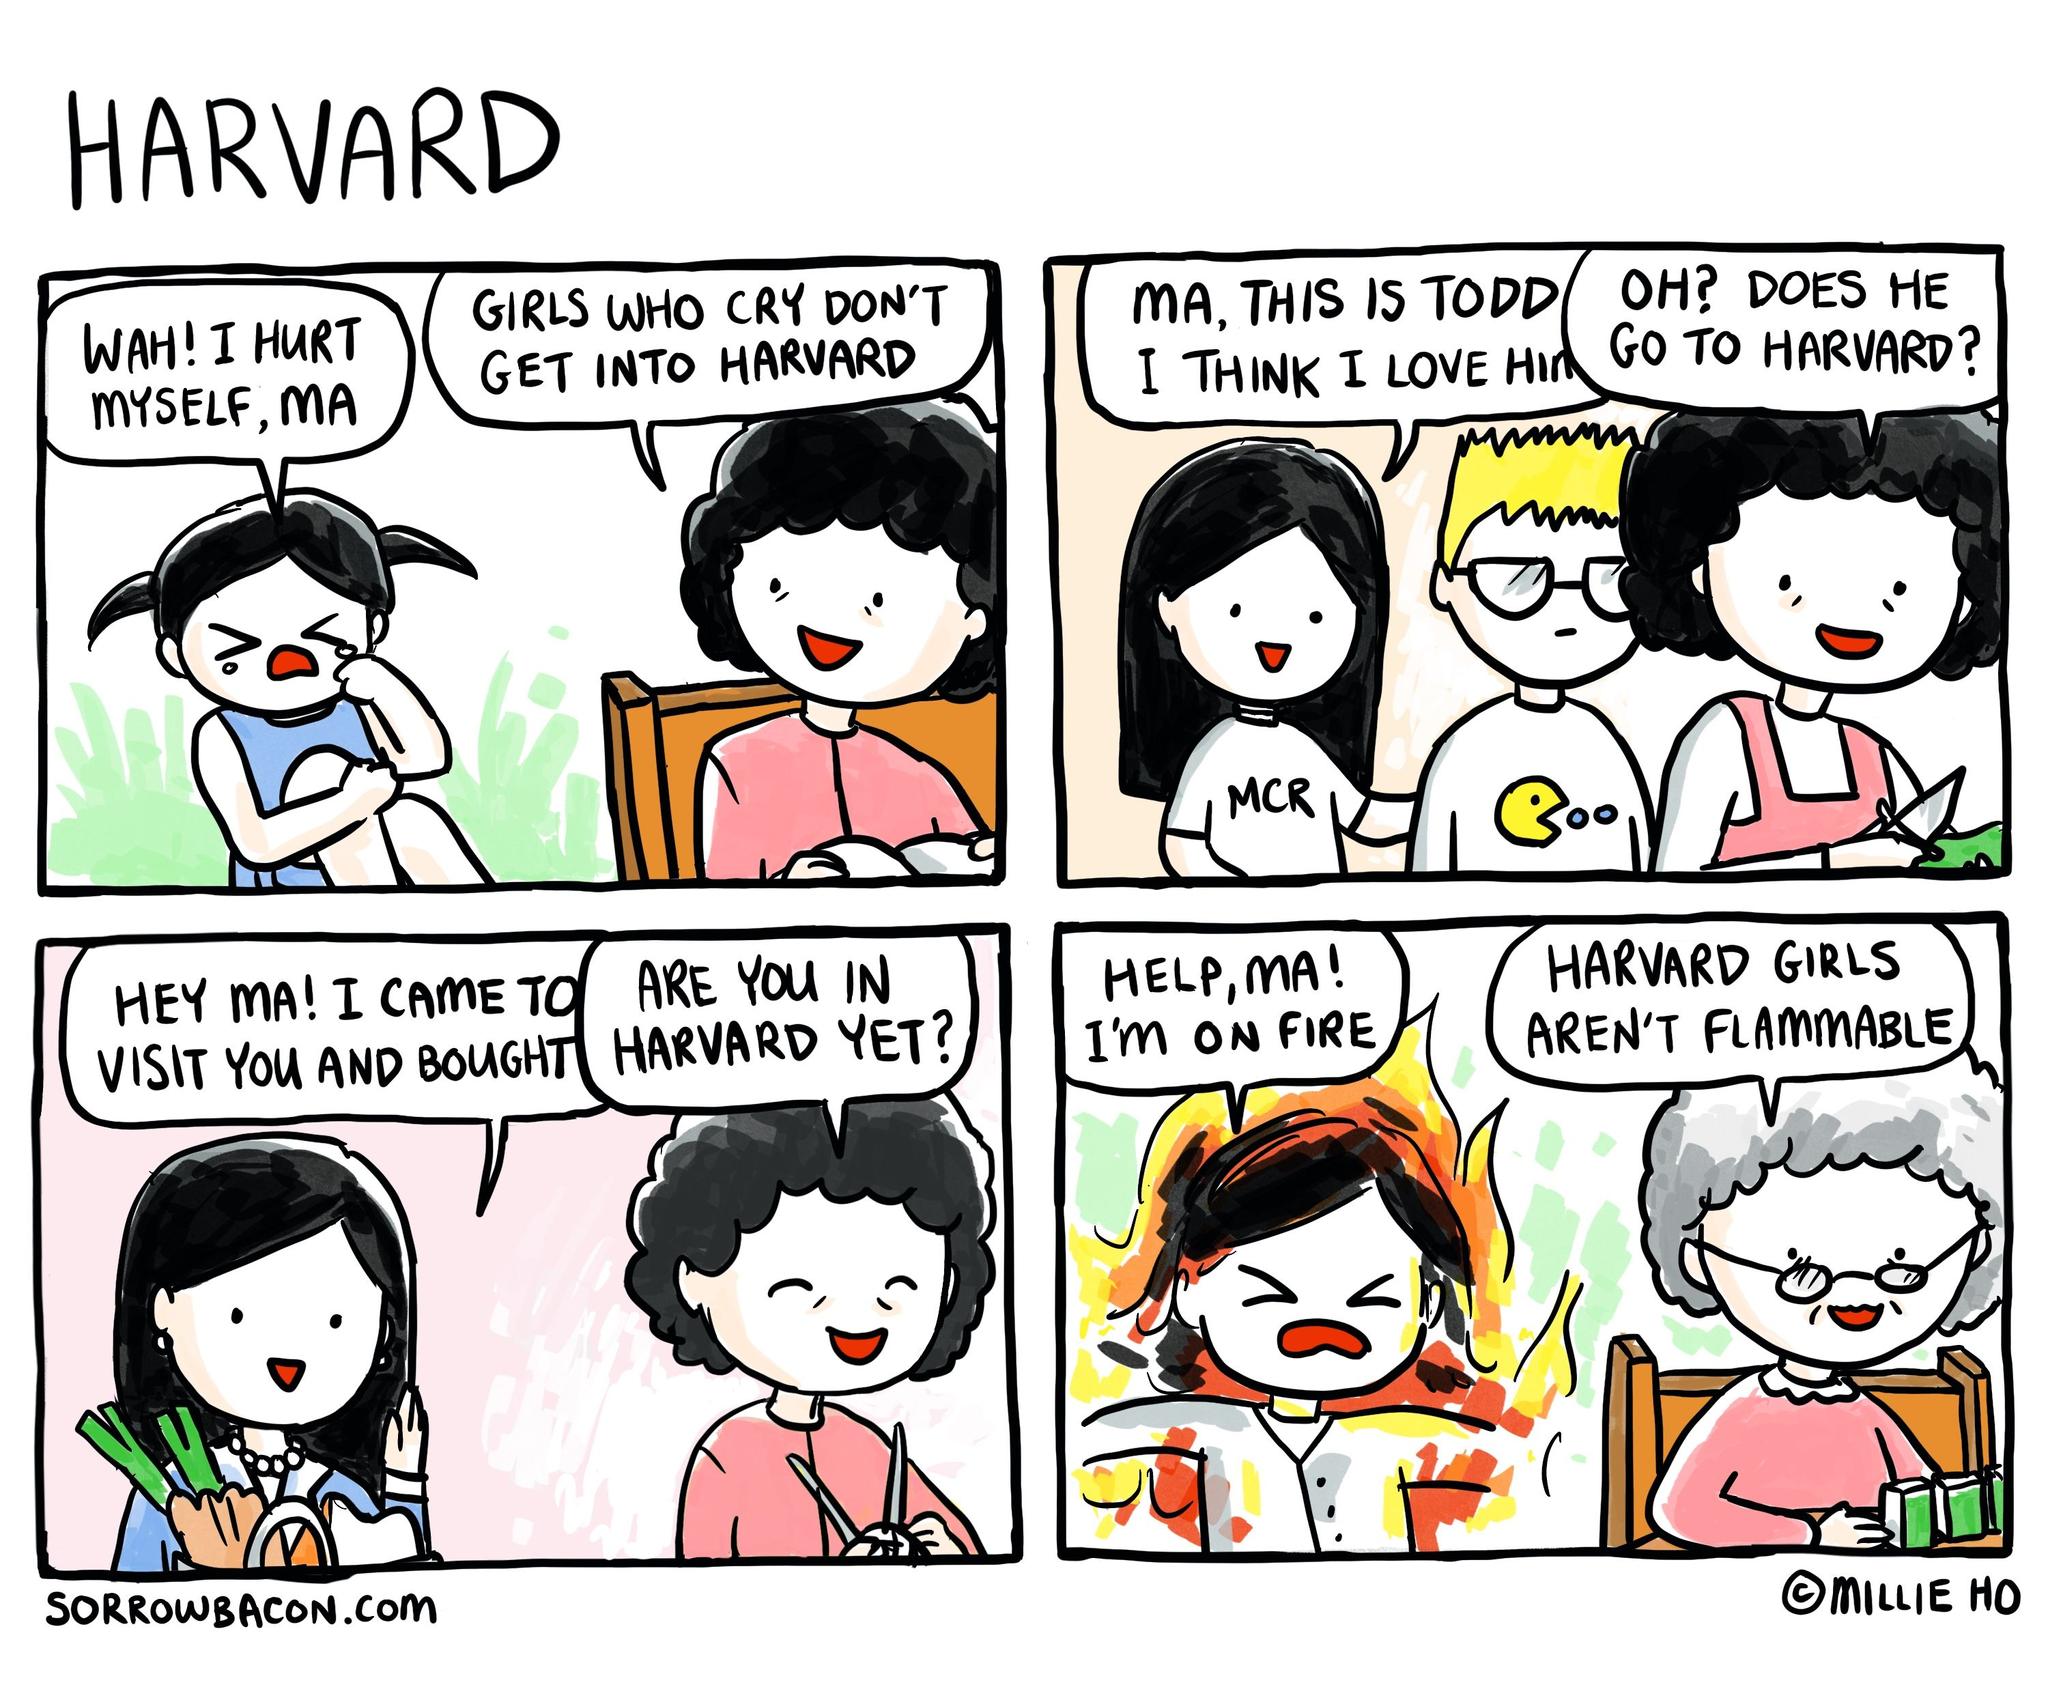 Harvard sorrowbacon comic 